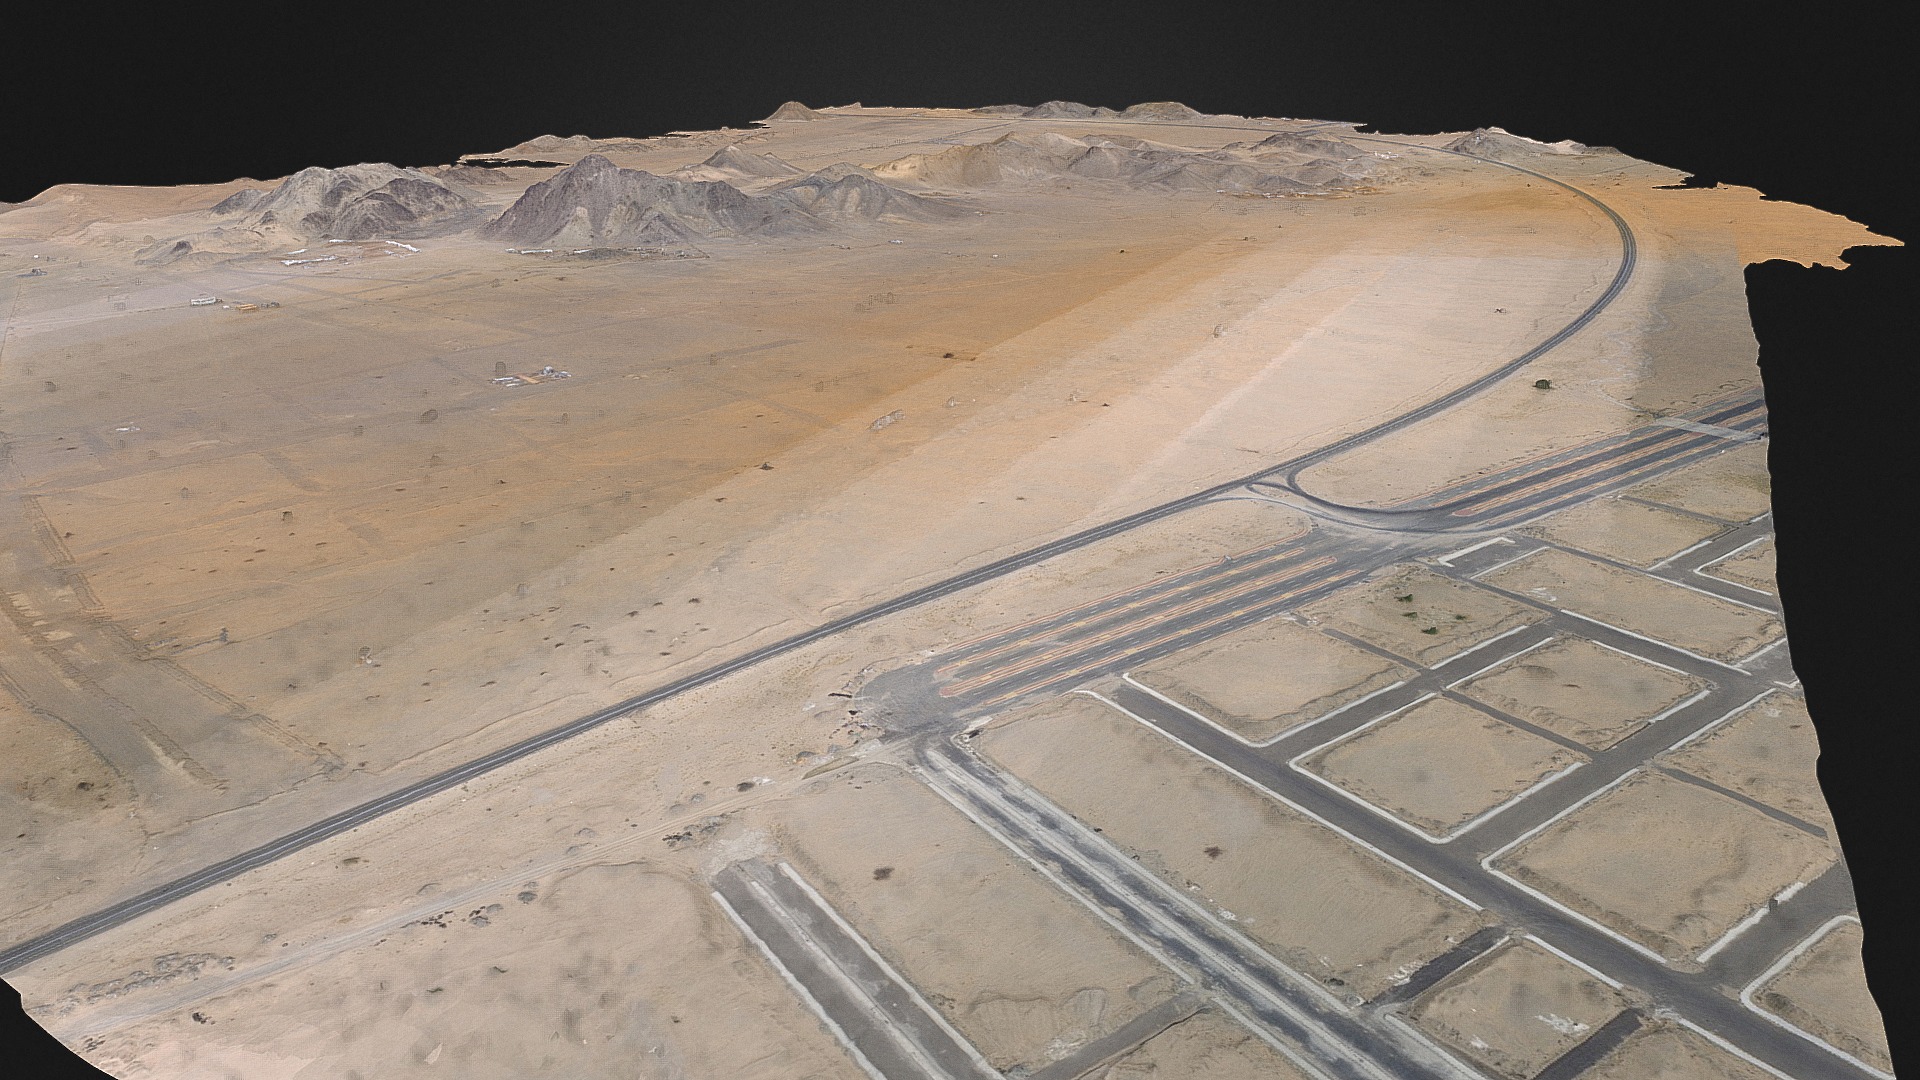 3D model 3d Survey work  7 Million meters - This is a 3D model of the 3d Survey work  7 Million meters. The 3D model is about a large desert landscape.